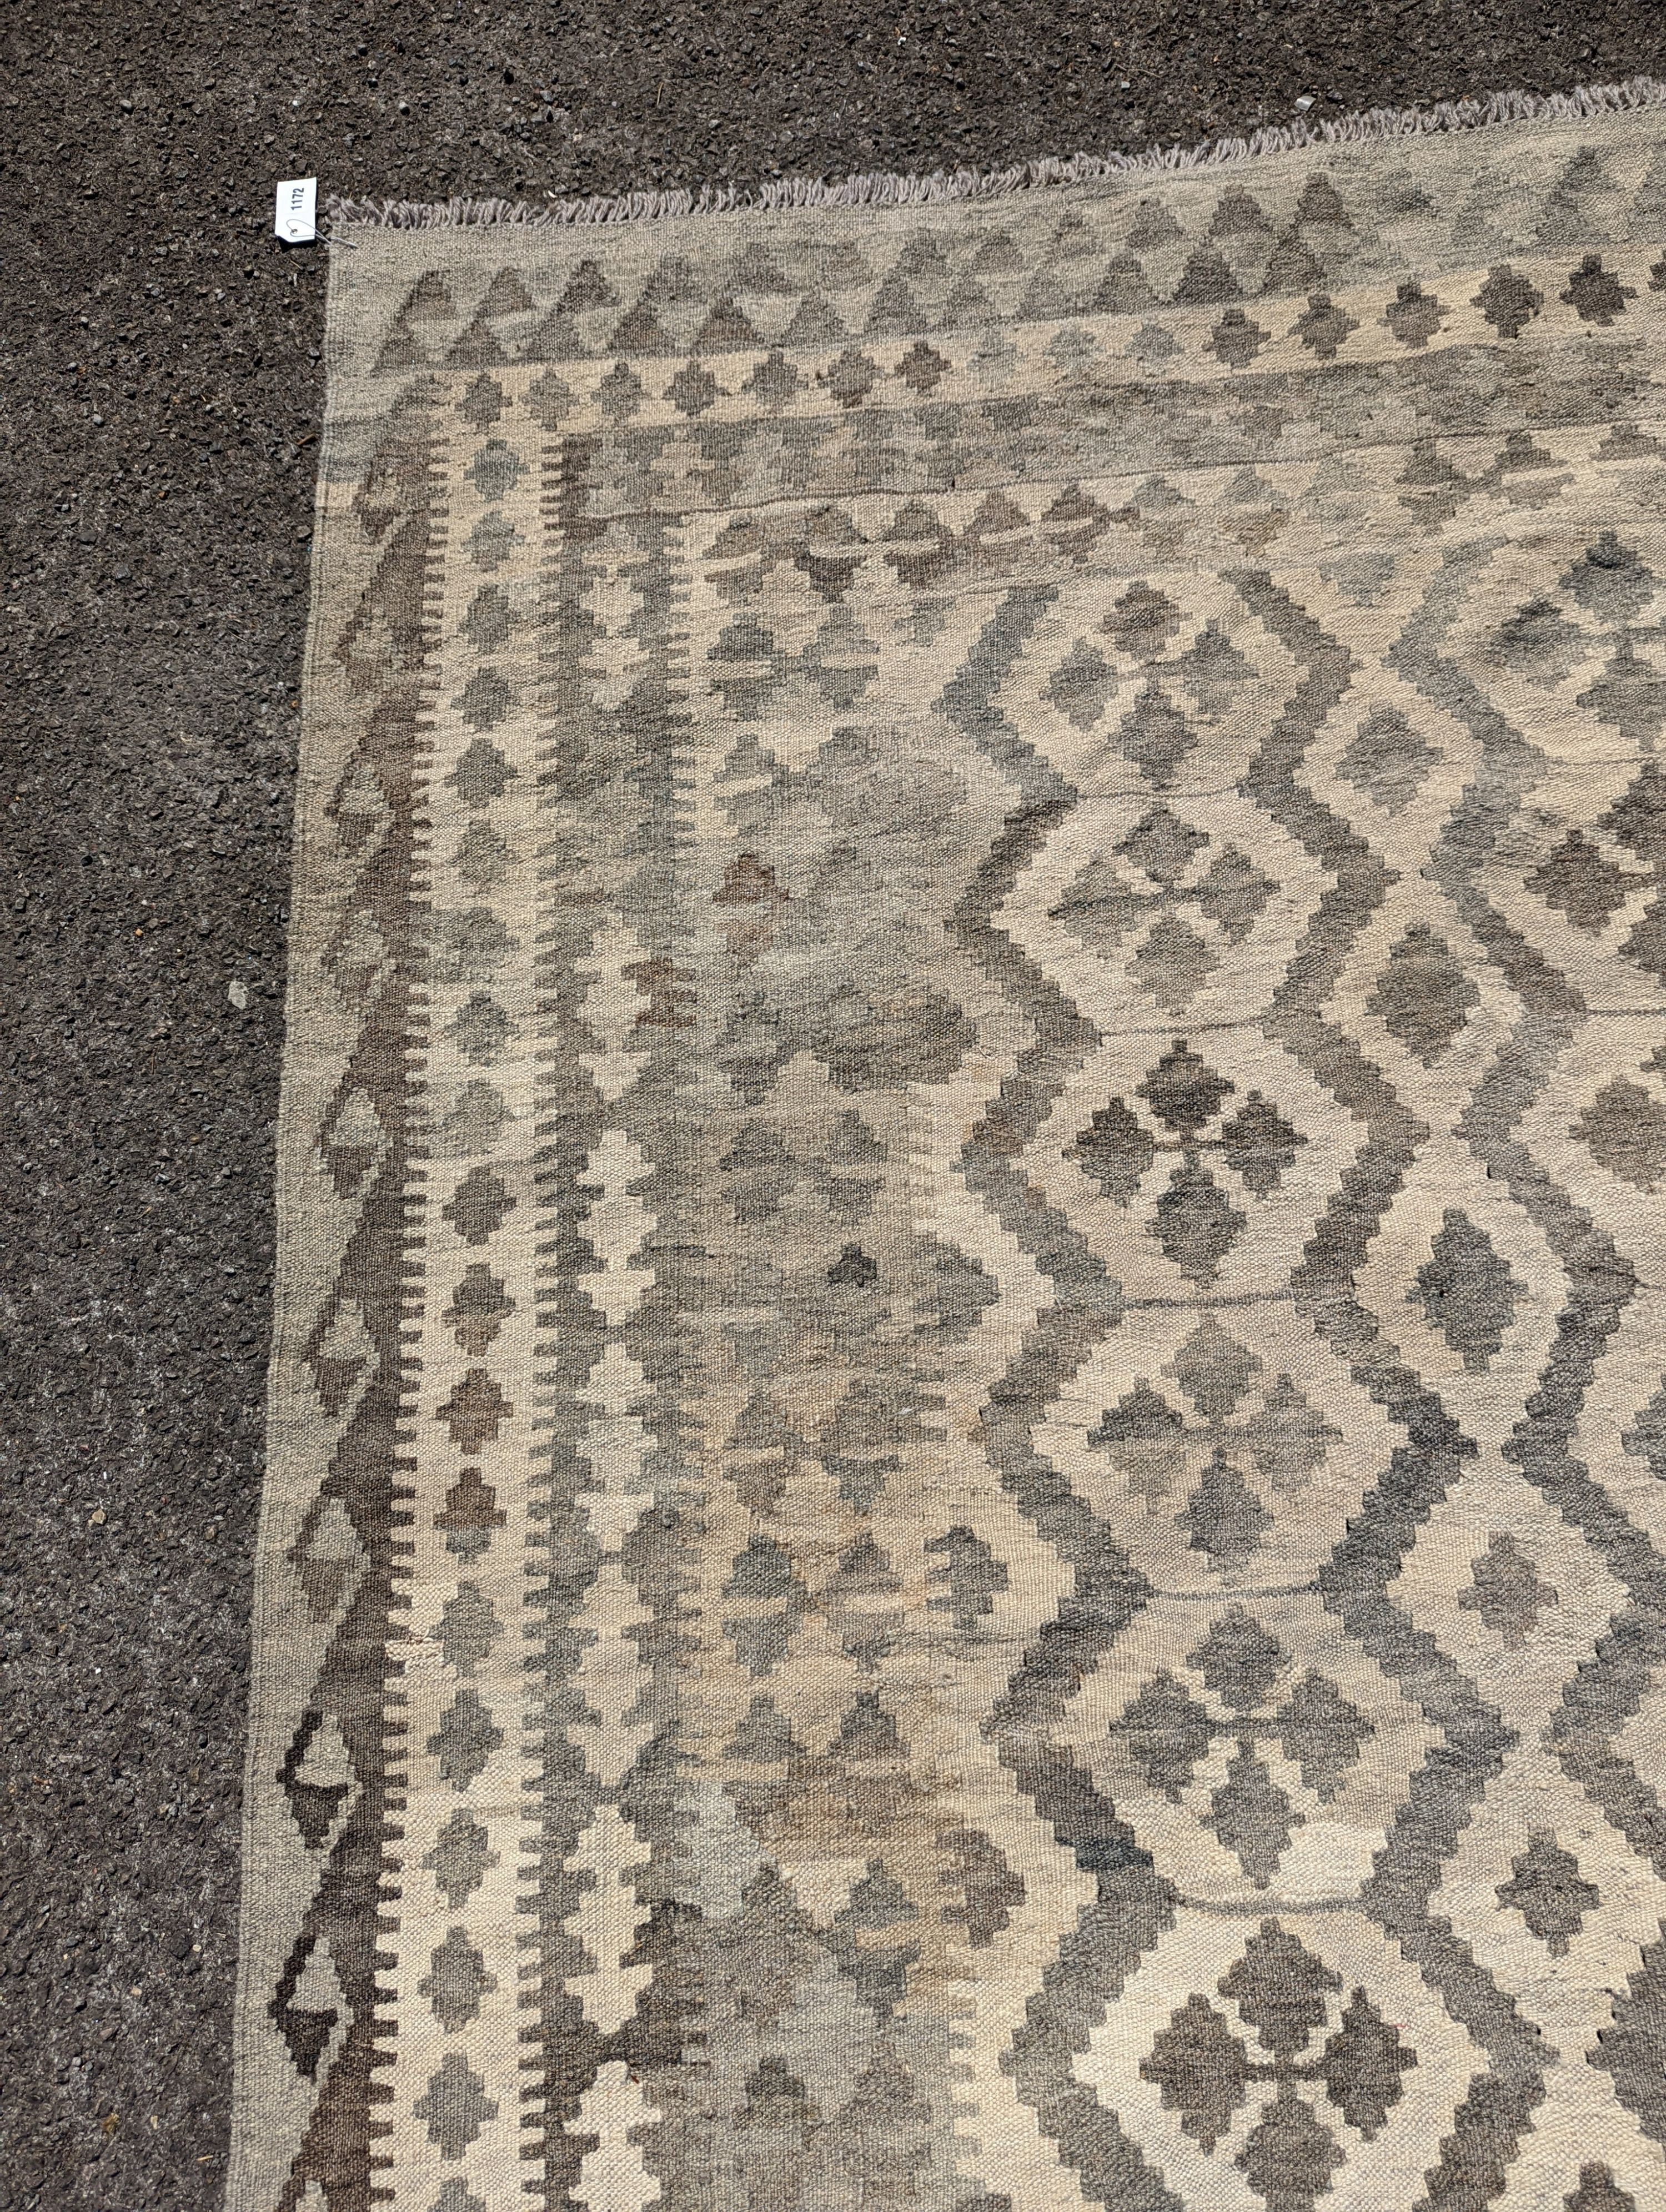 An Anatolian monochrome geometric flatweave carpet, 230 x 175cm